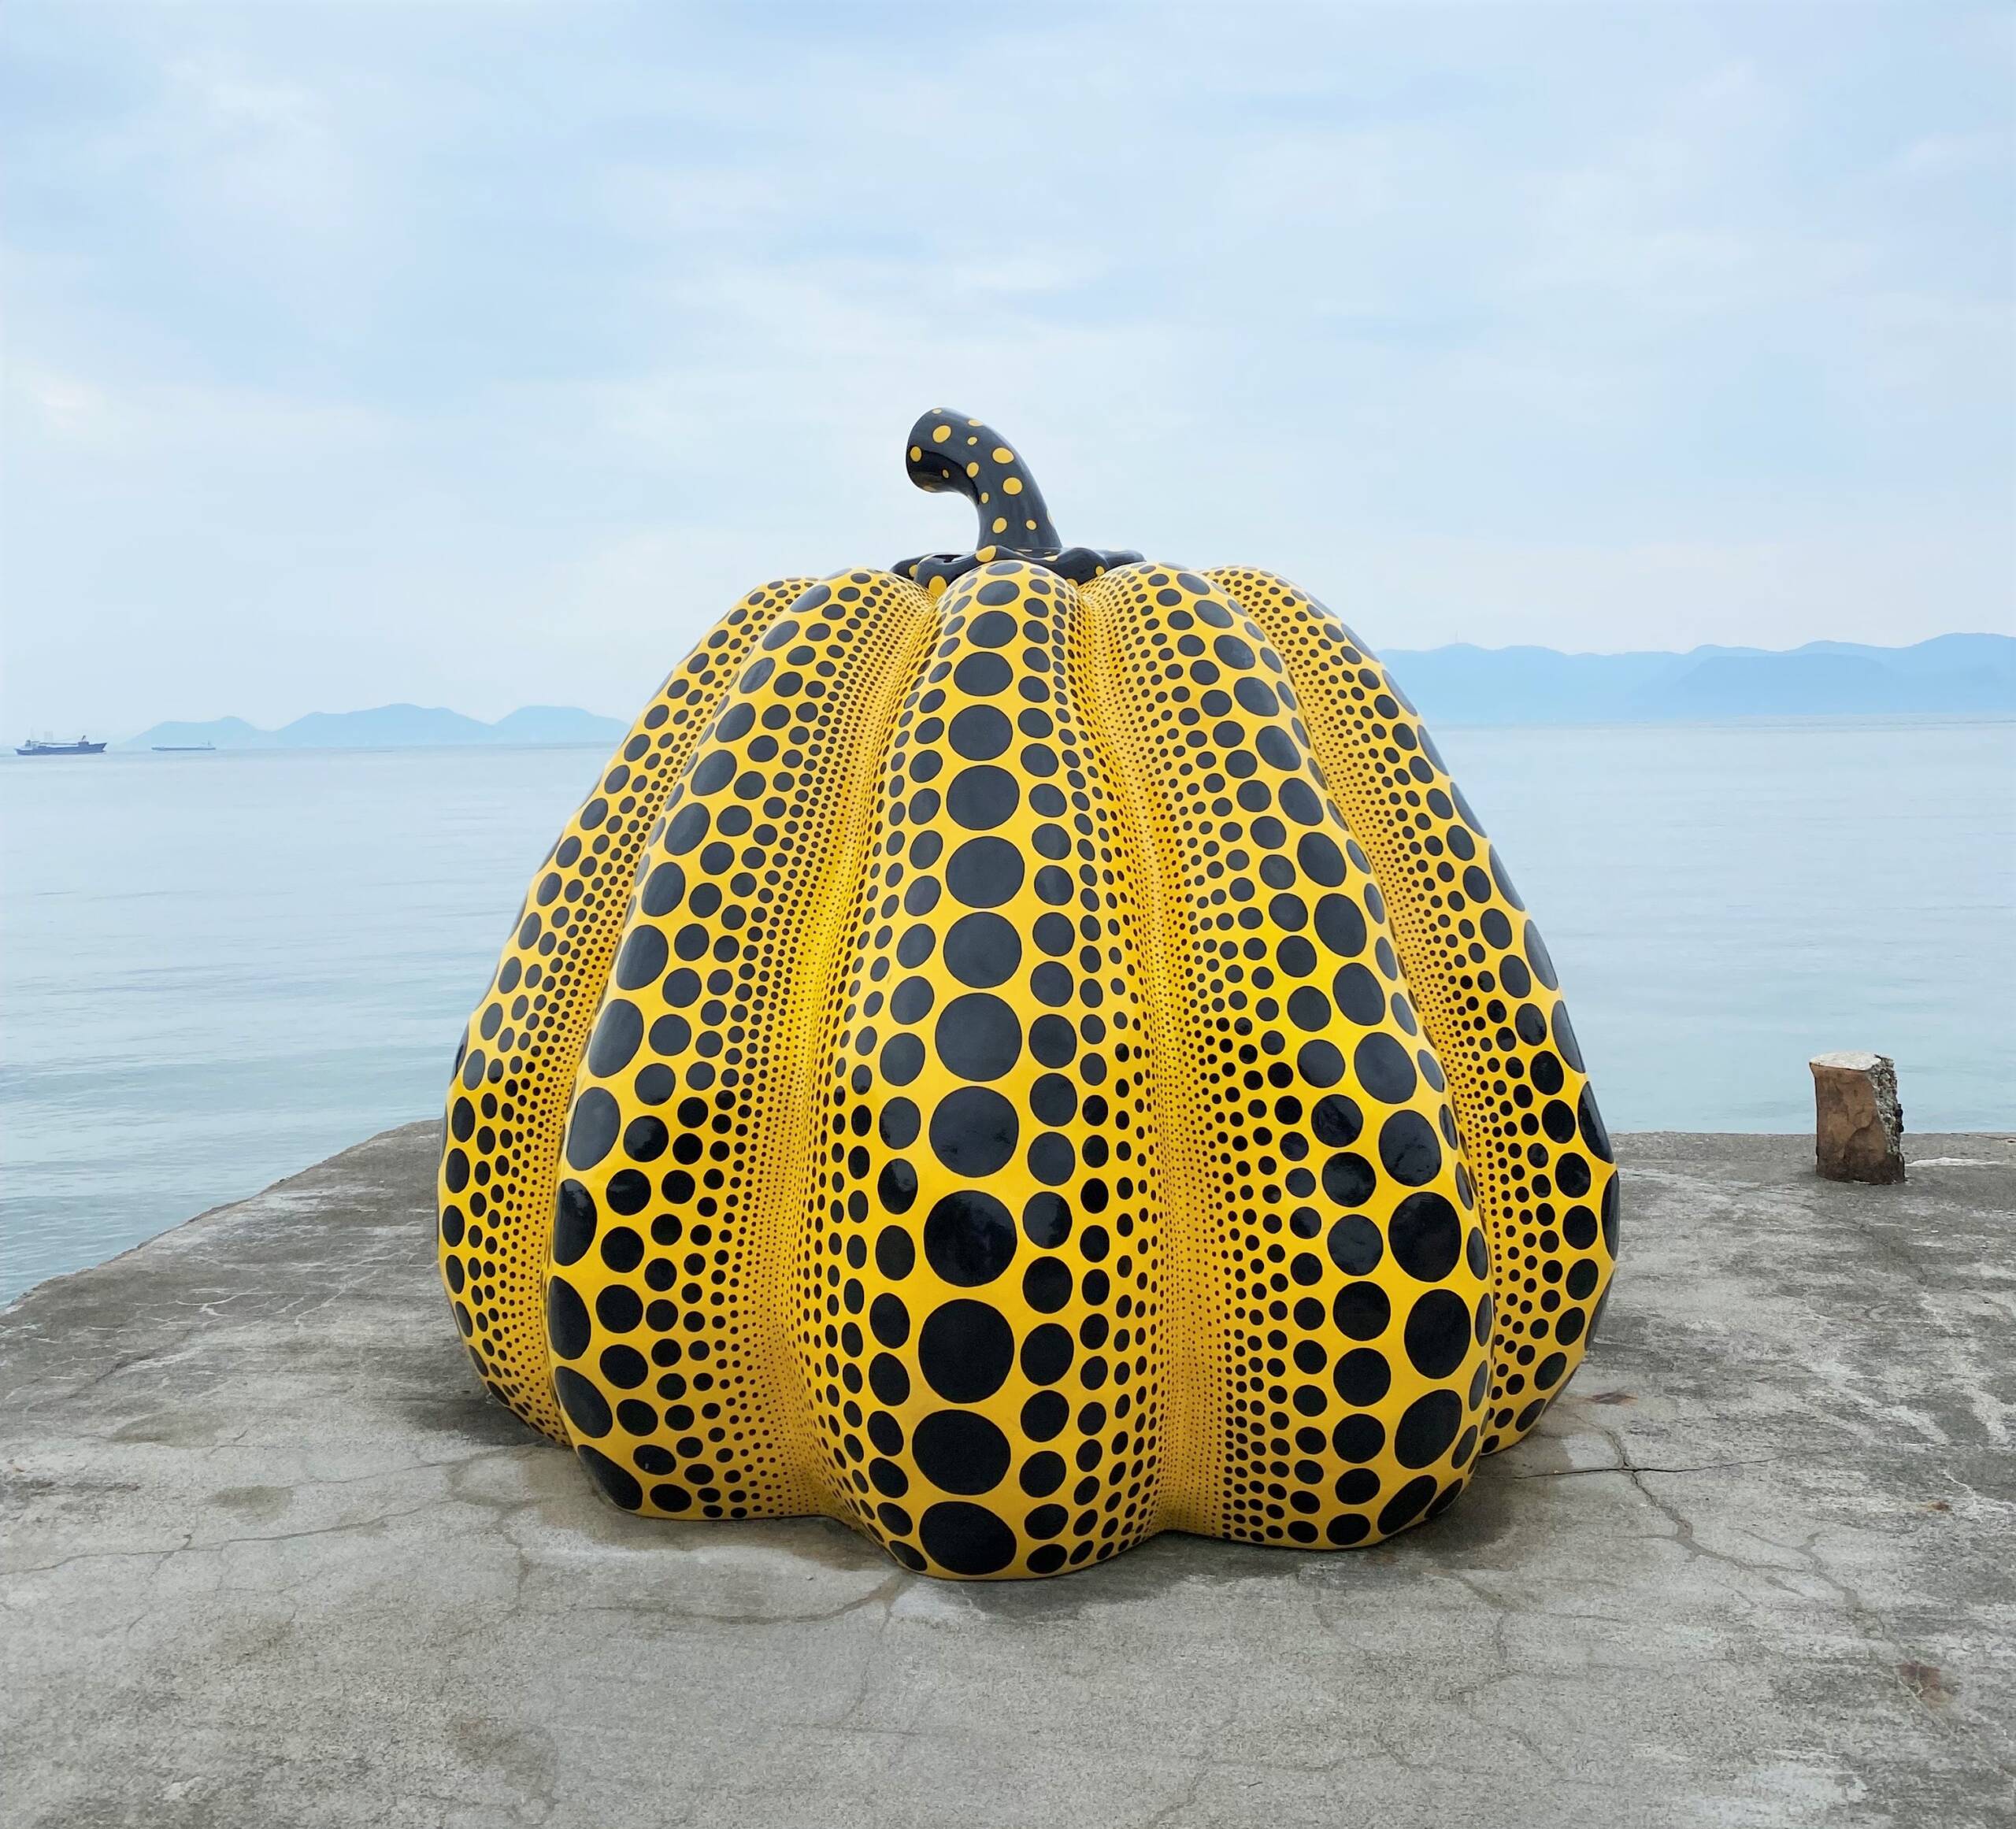 Yayoi Kusama's pumpkin returns to Naoshima as restoration ends